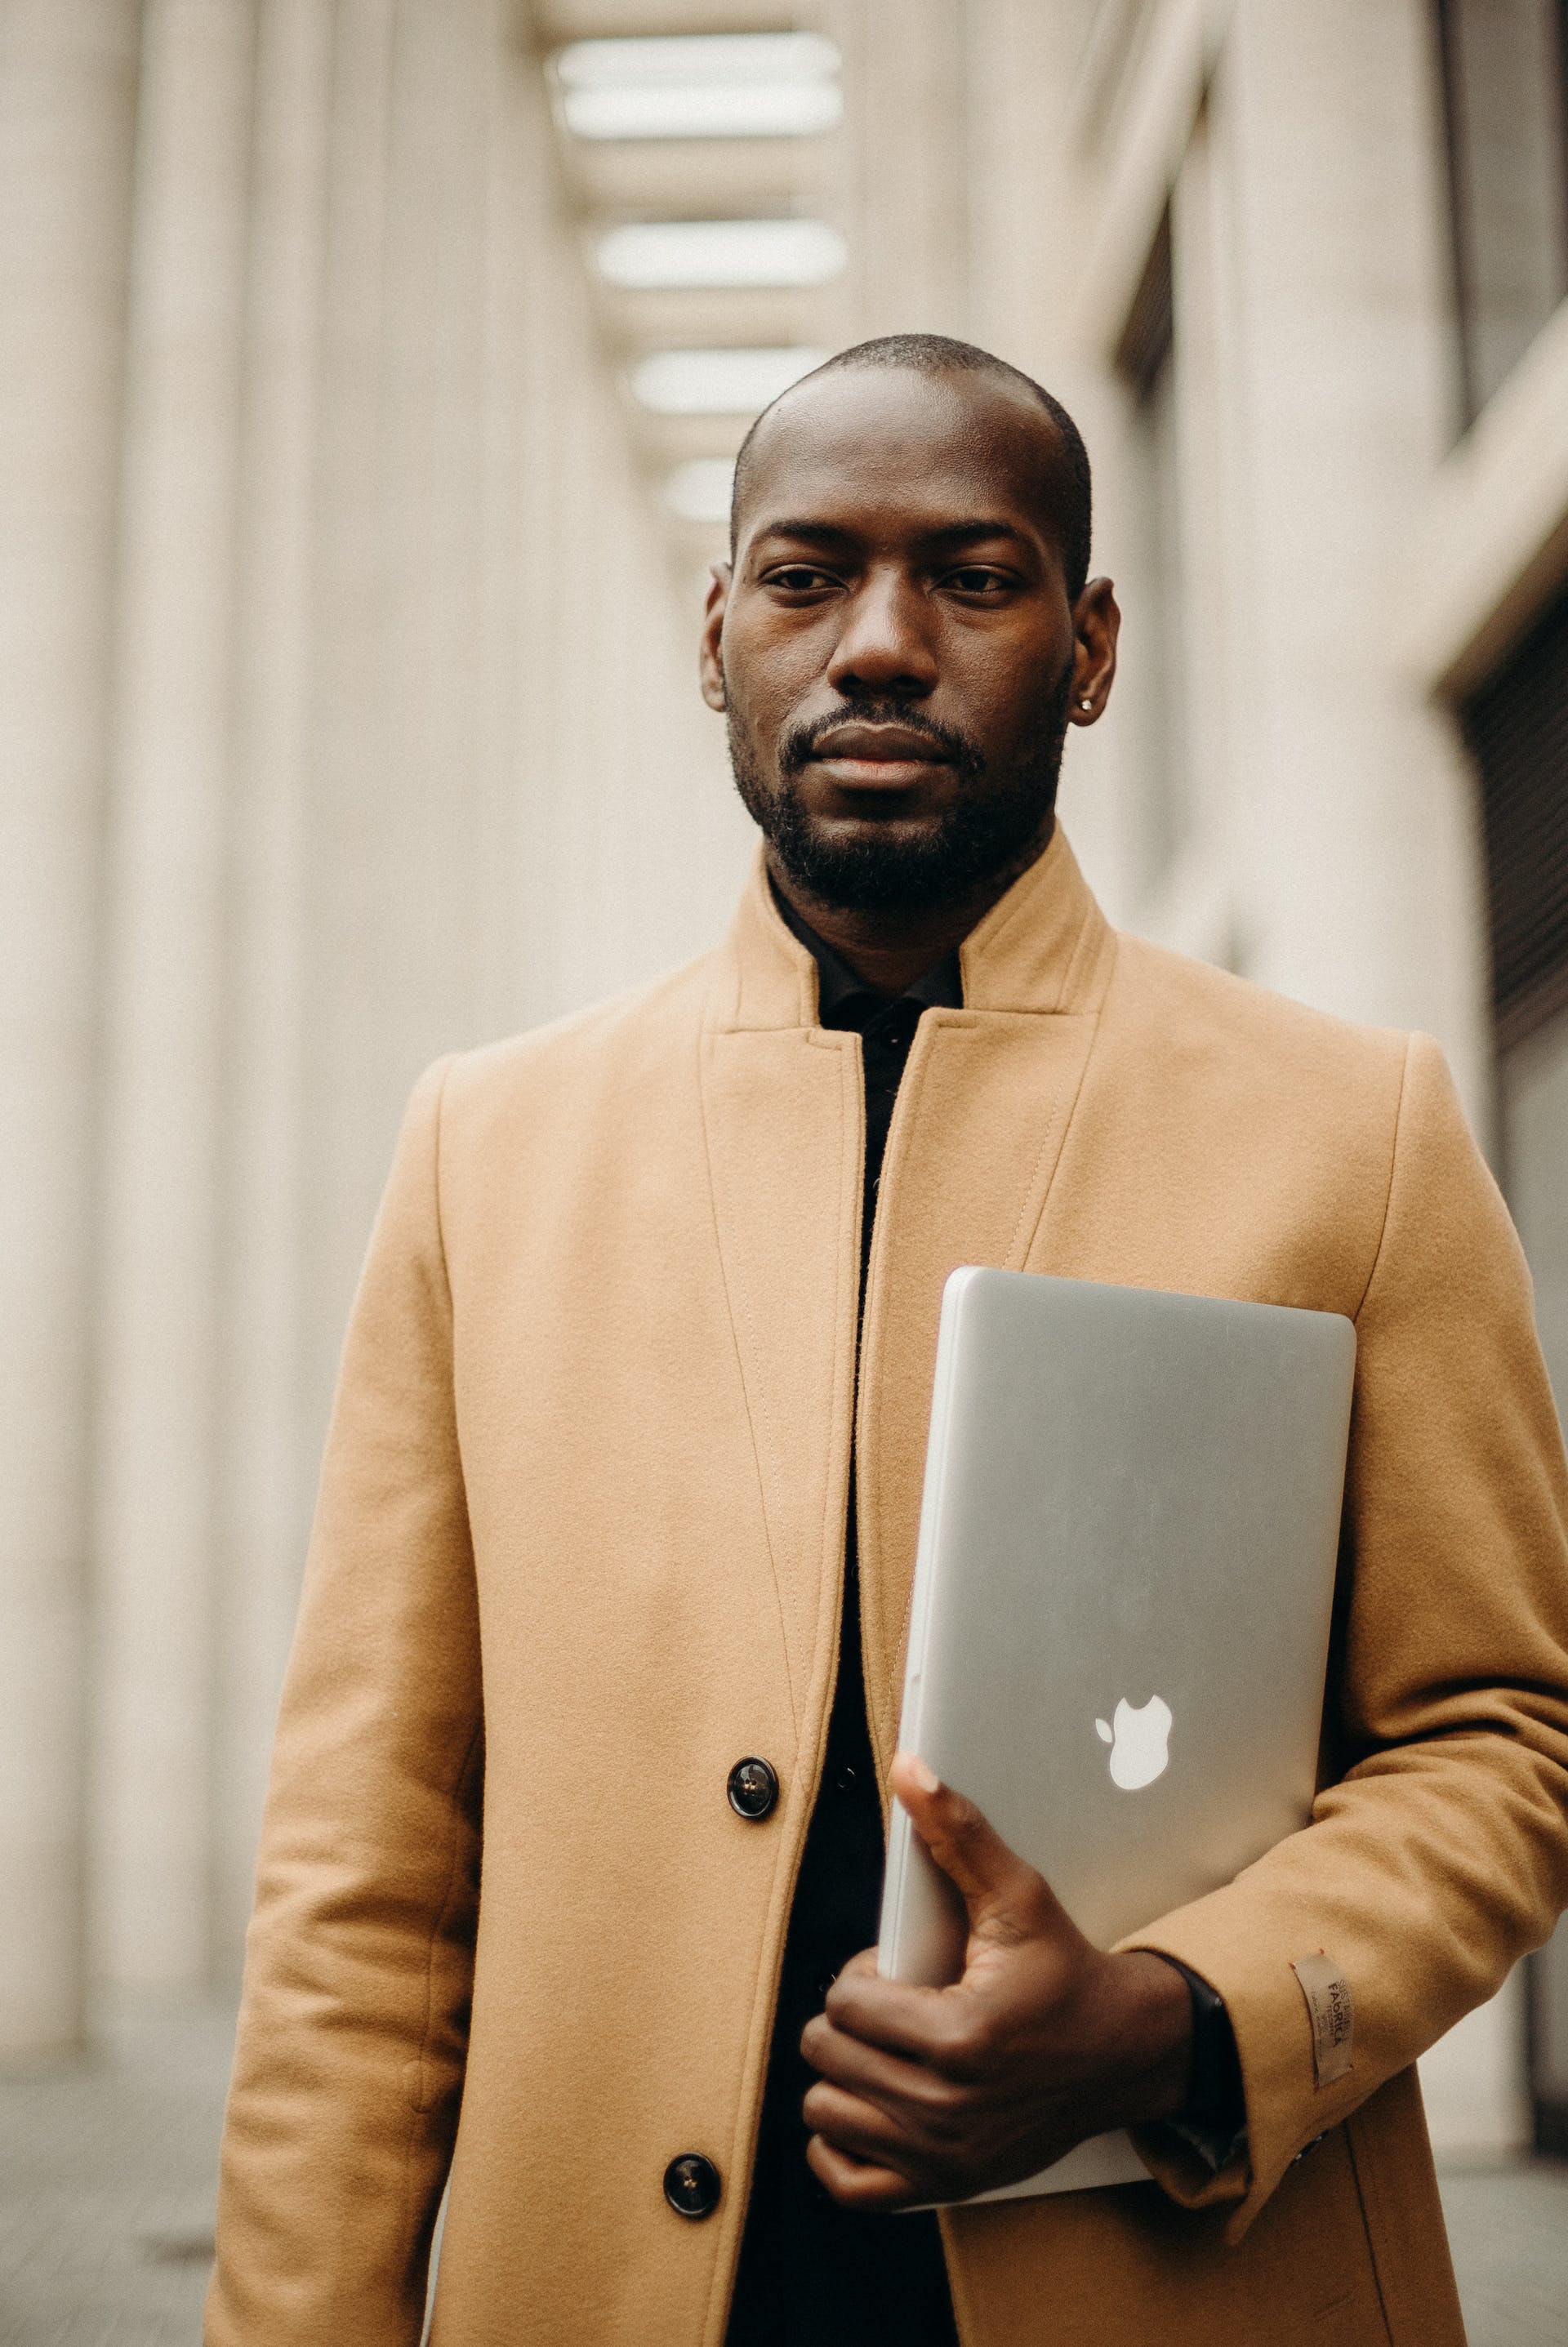 A man holding a laptop | Source: Pexels